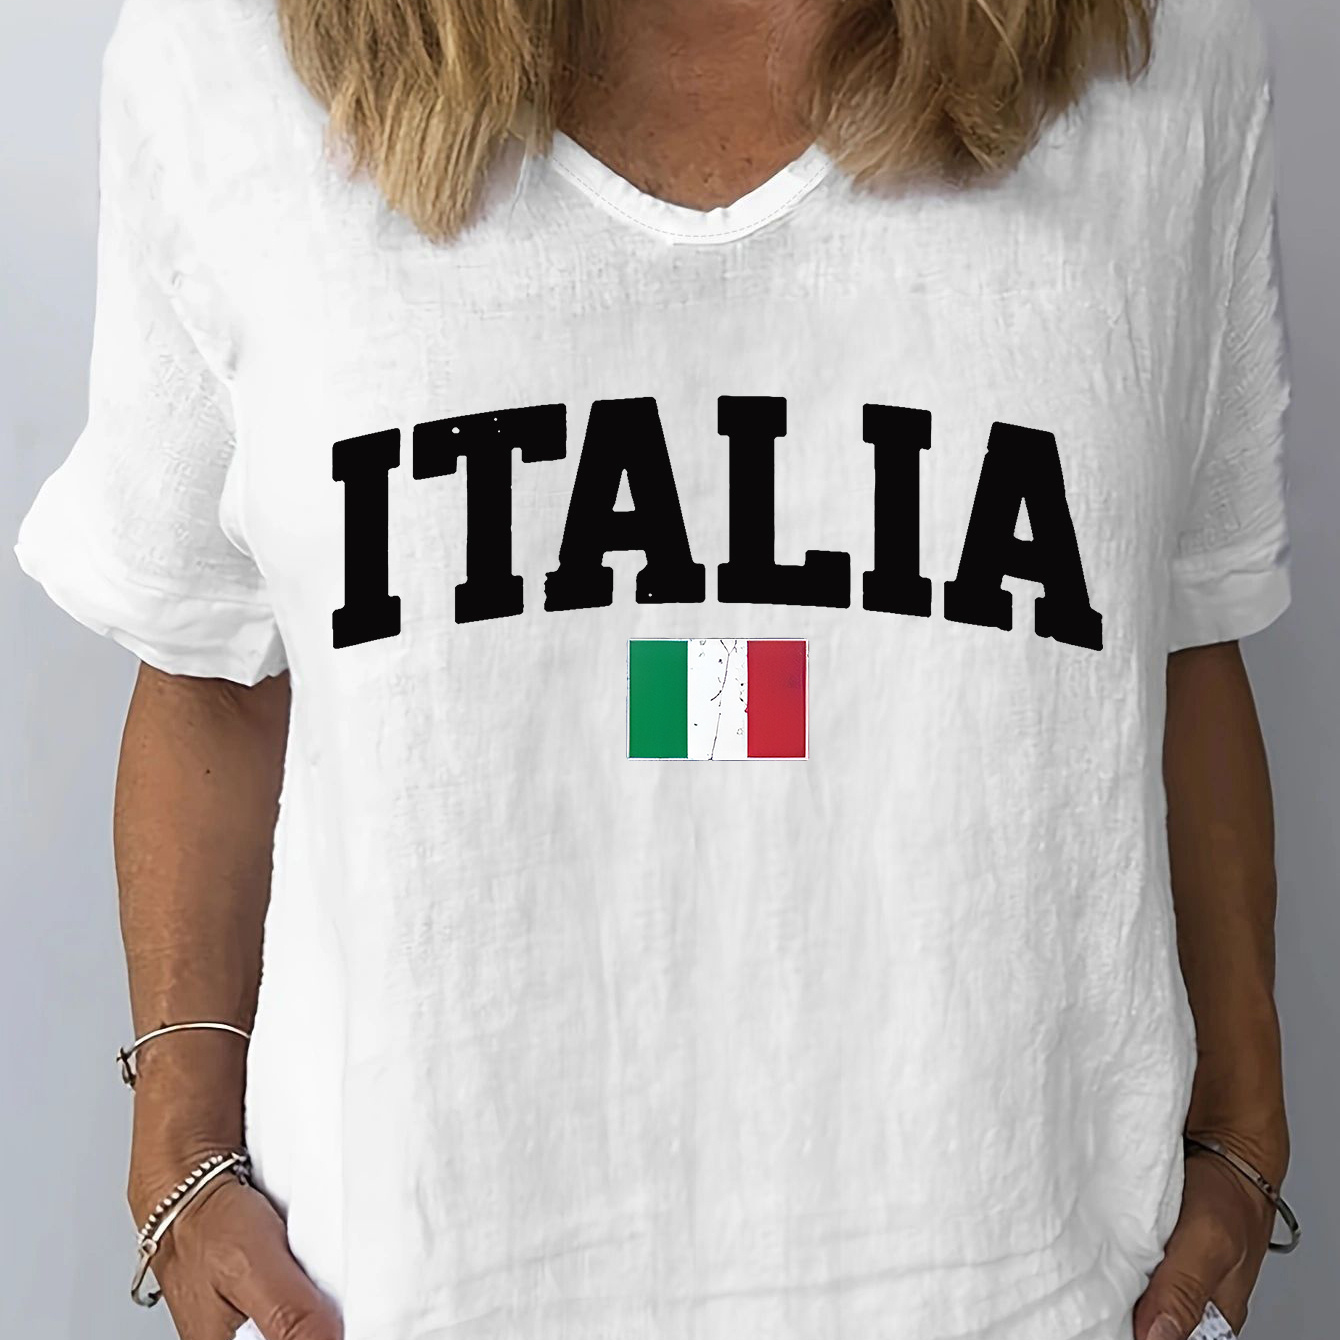 

Italia Letter Print T-shirt, Short Sleeve V Neck Casual Top For Summer & Spring, Women's Clothing